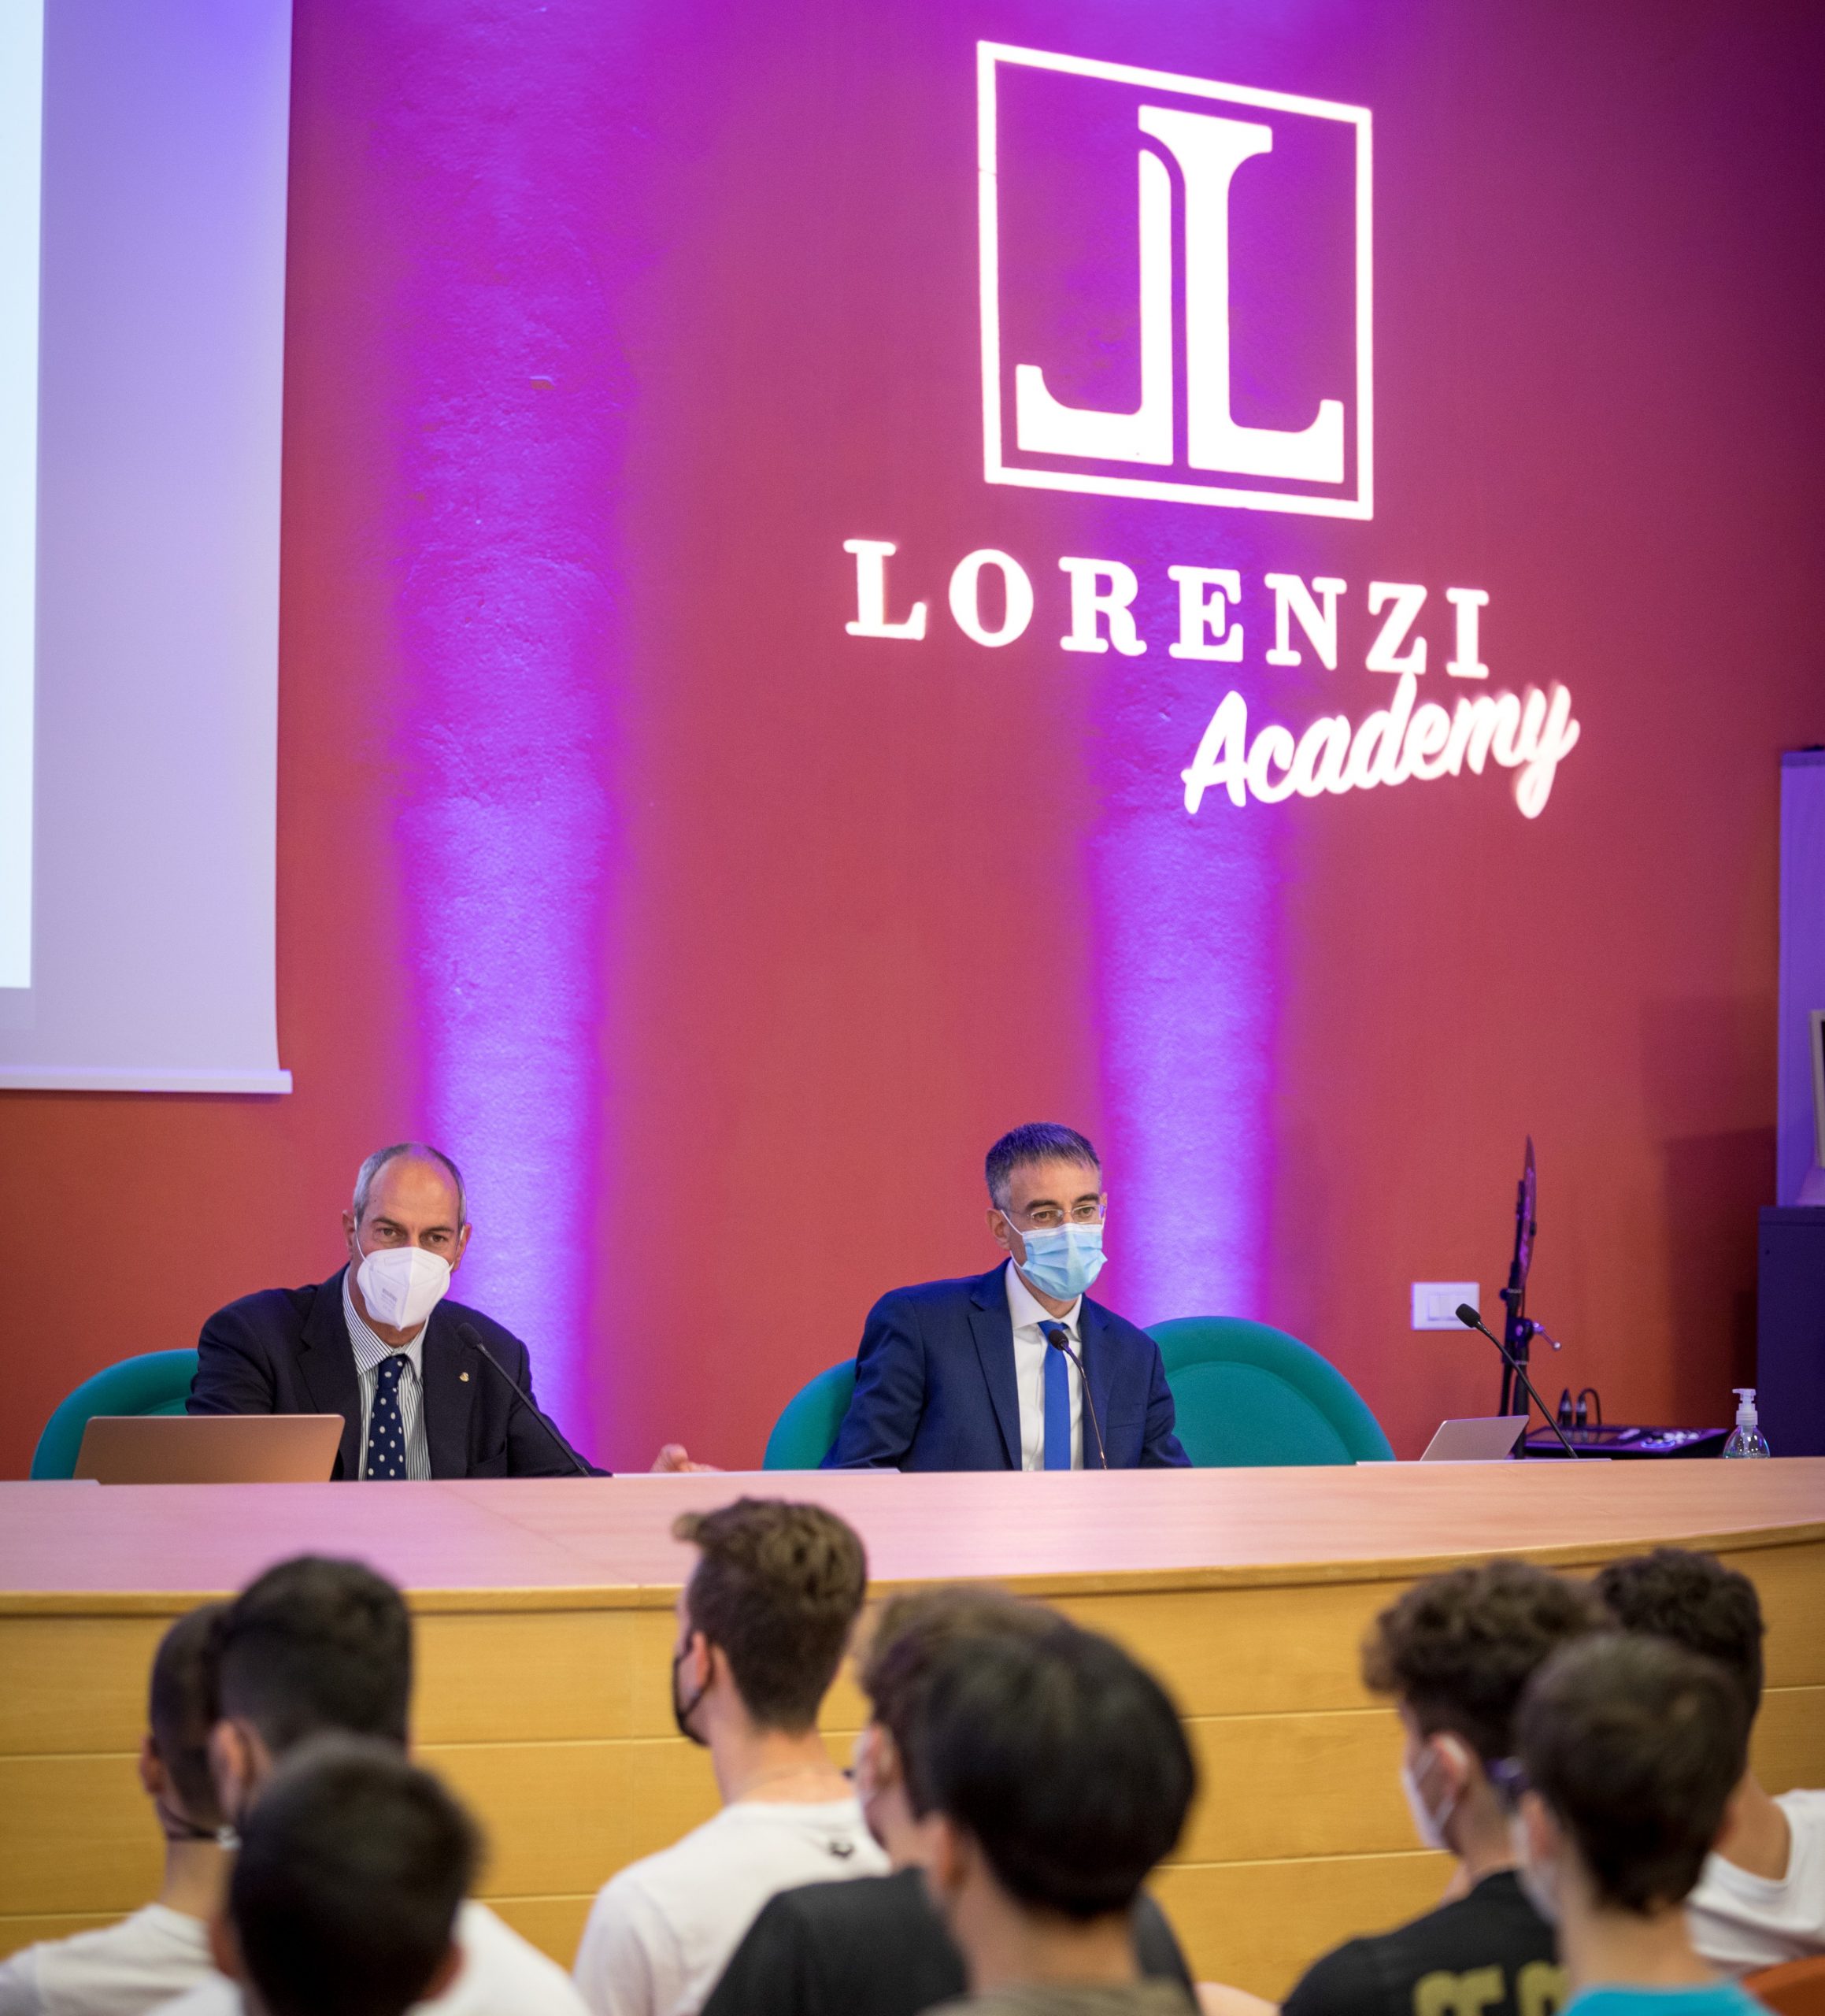 logo lorenzi group academy, Diego Lorenzi e i ragazzi della scuola